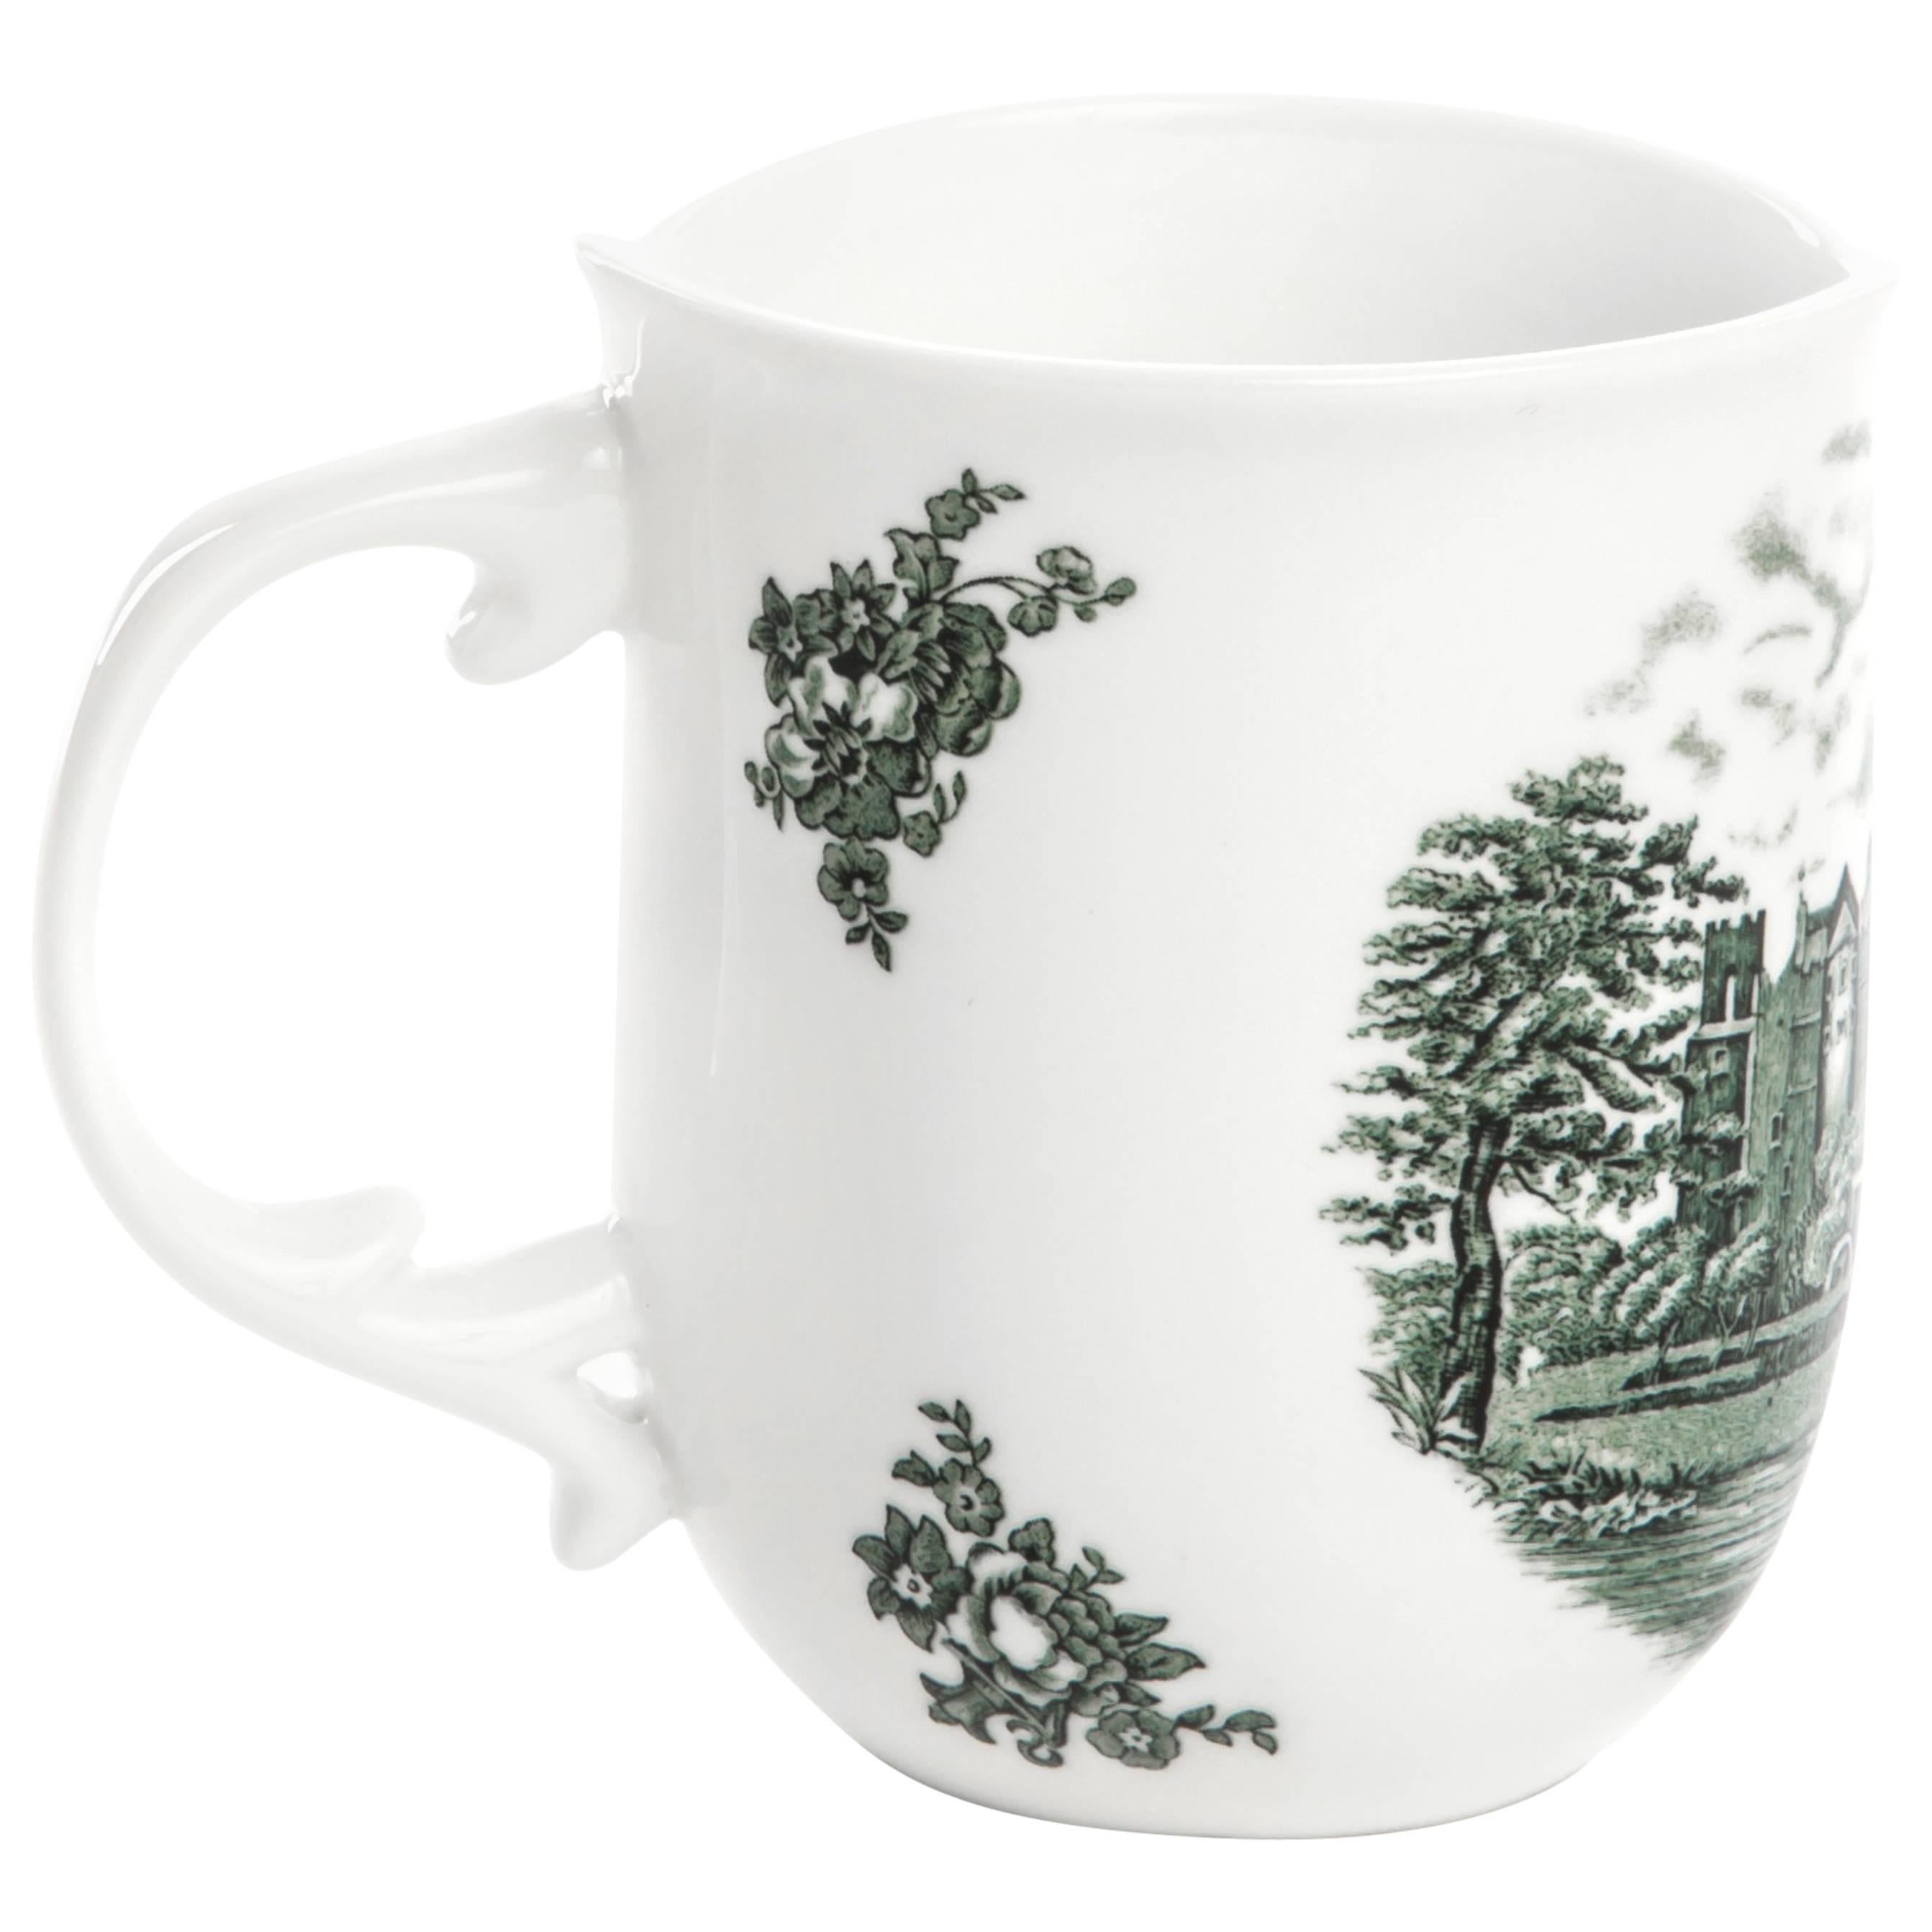 Seletti "Hybrid-Fedora" Mug in Porcelain